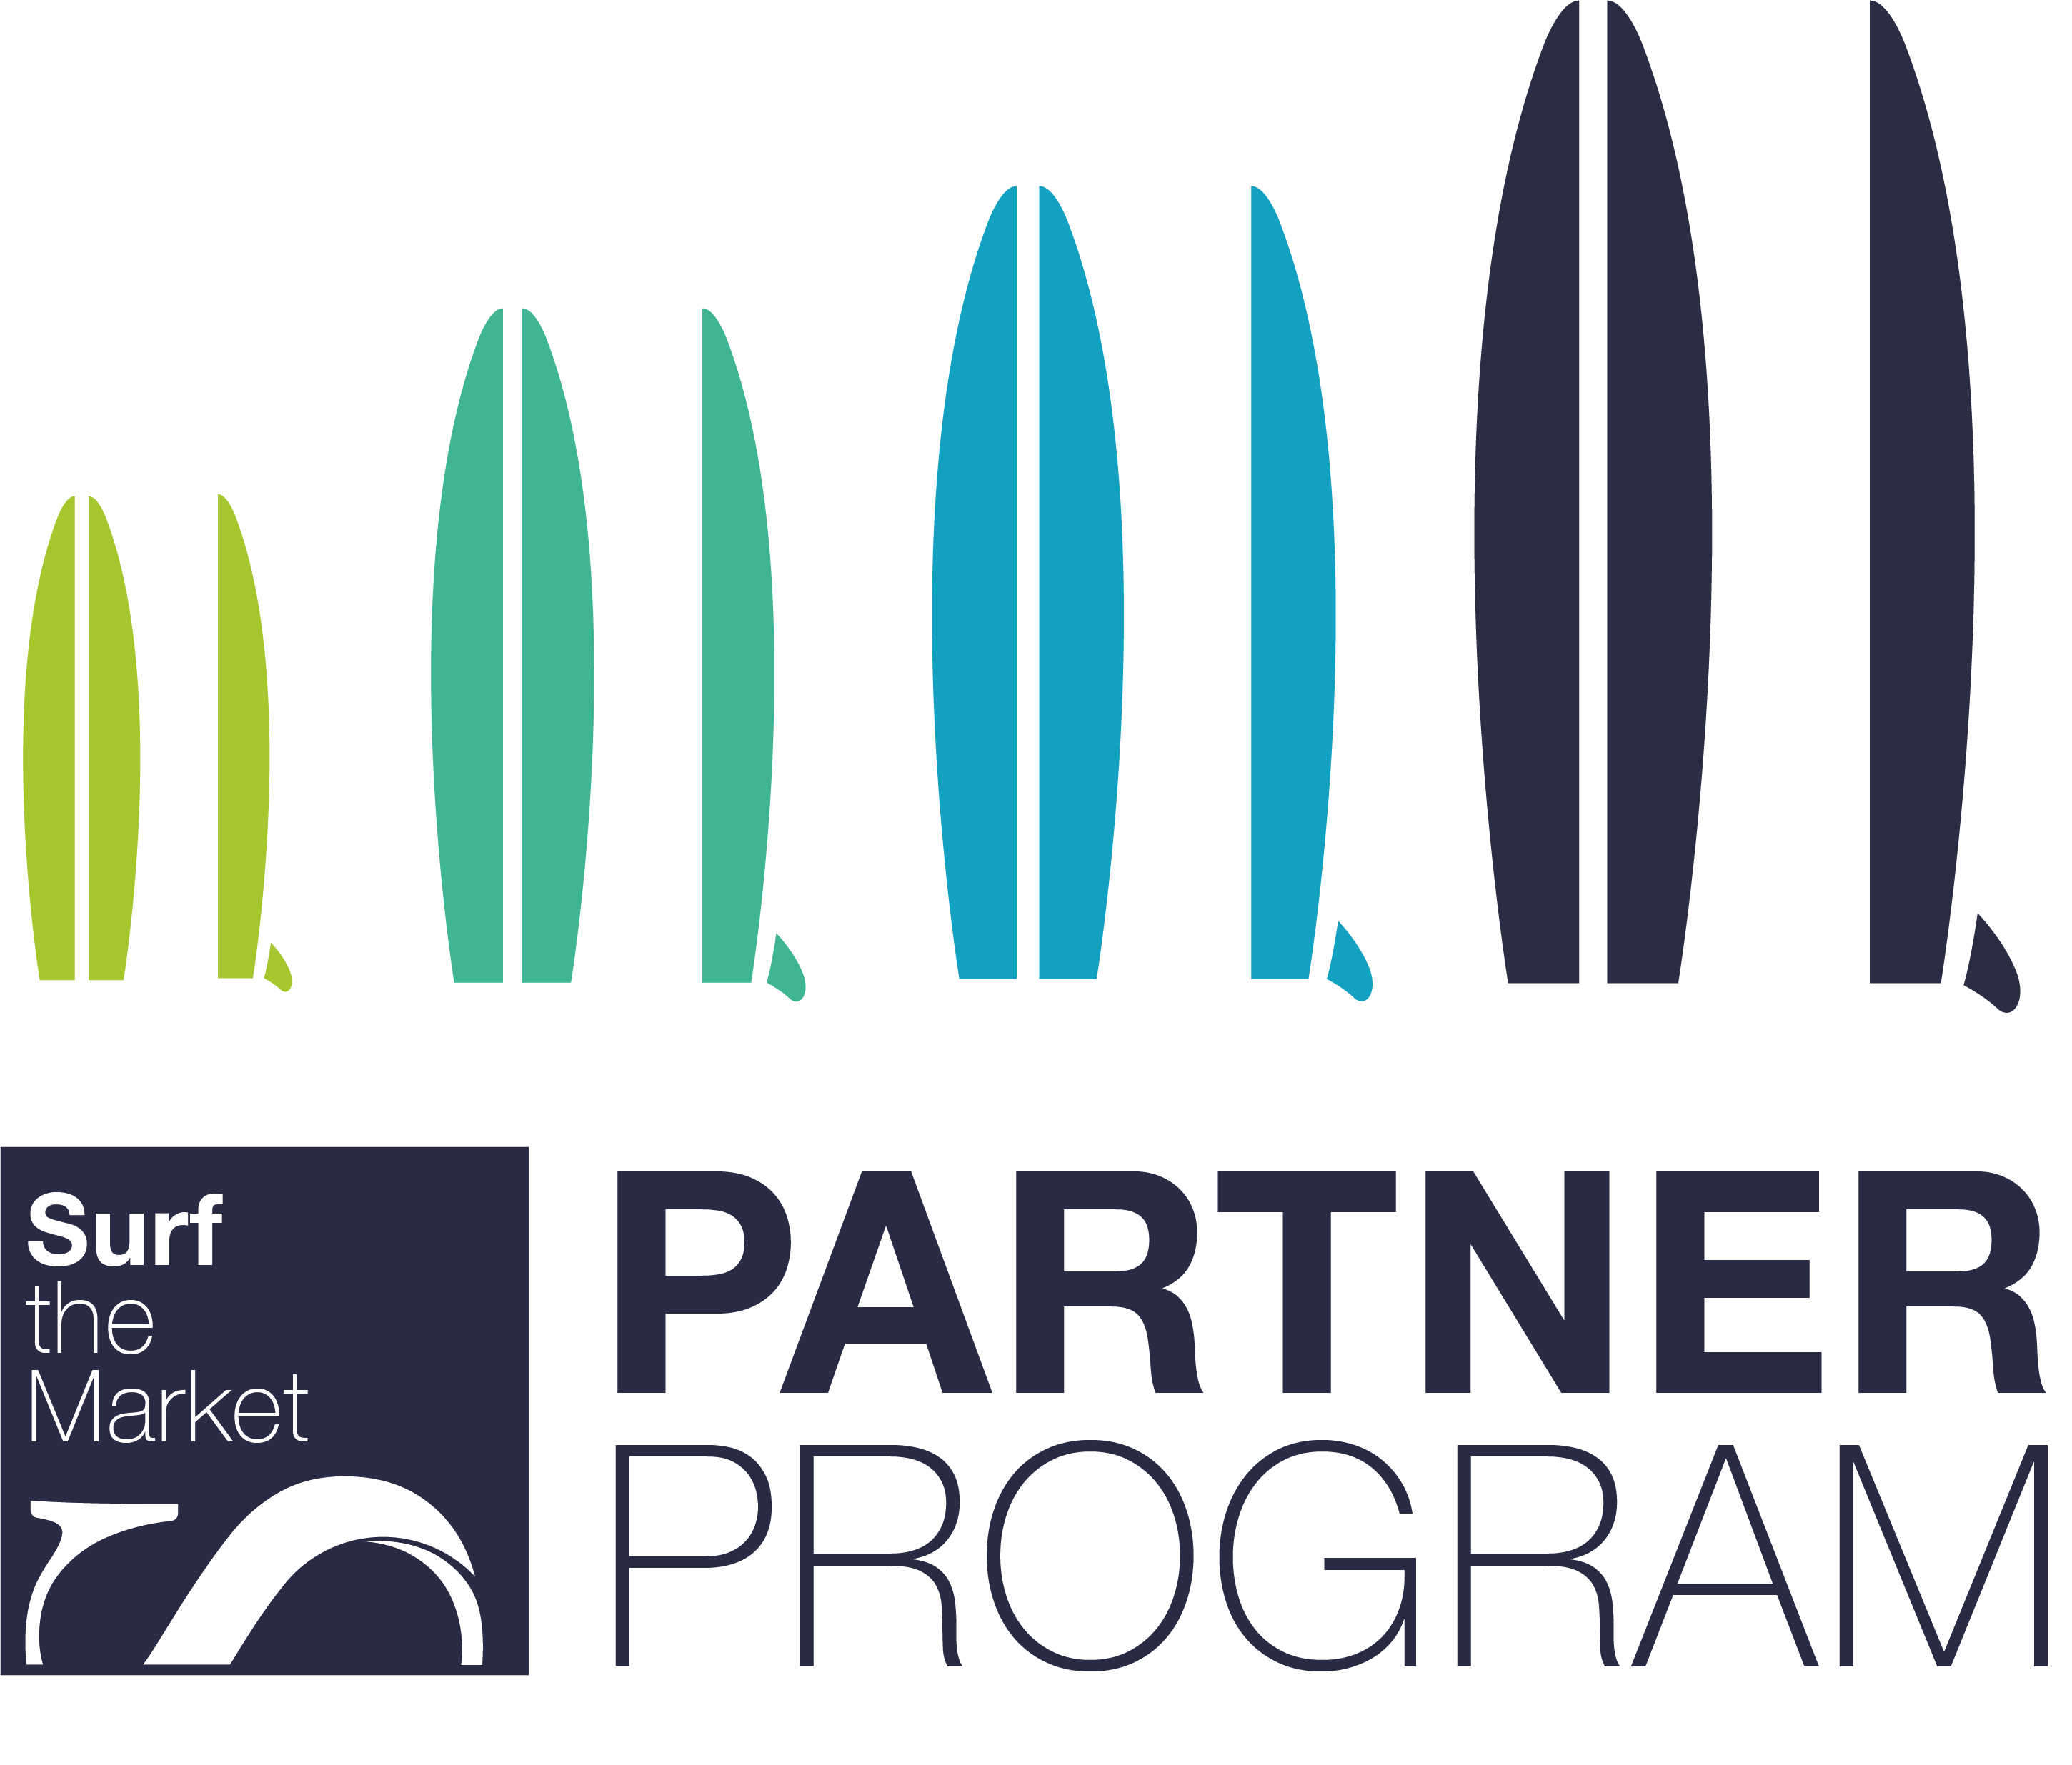 Studio Iandiorio - Surf The Market - Partner Program